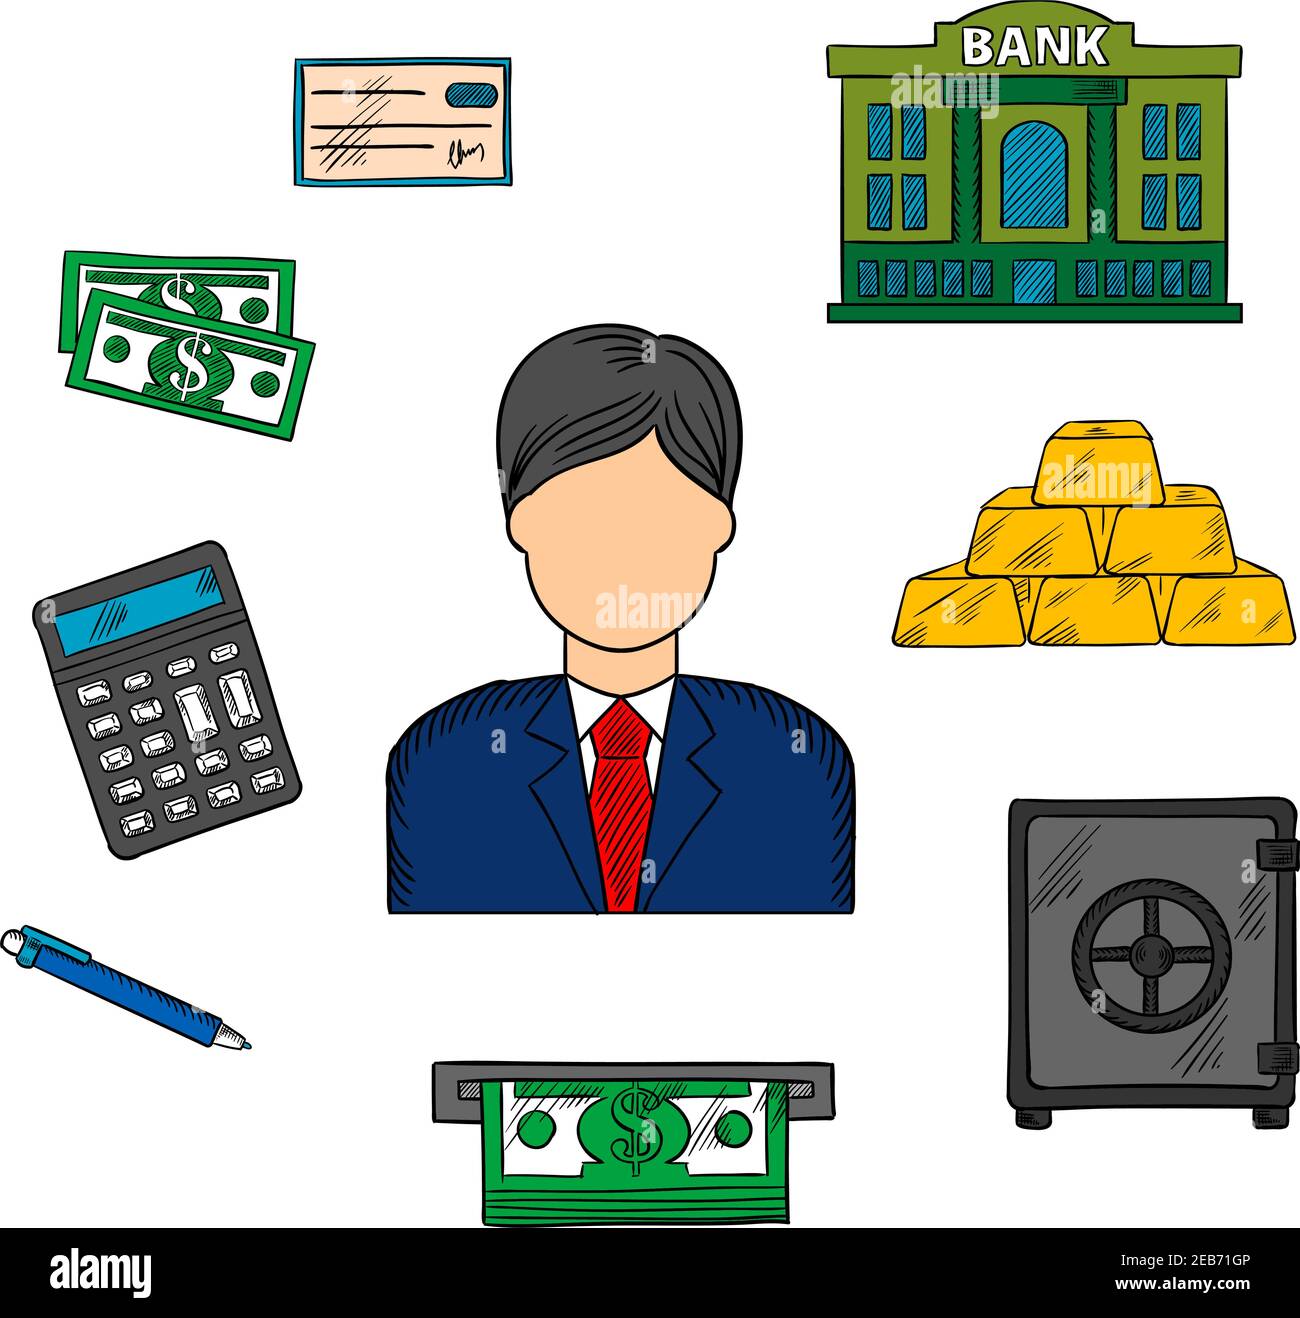 Man suit business bank elegant Stock Vector Images - Alamy